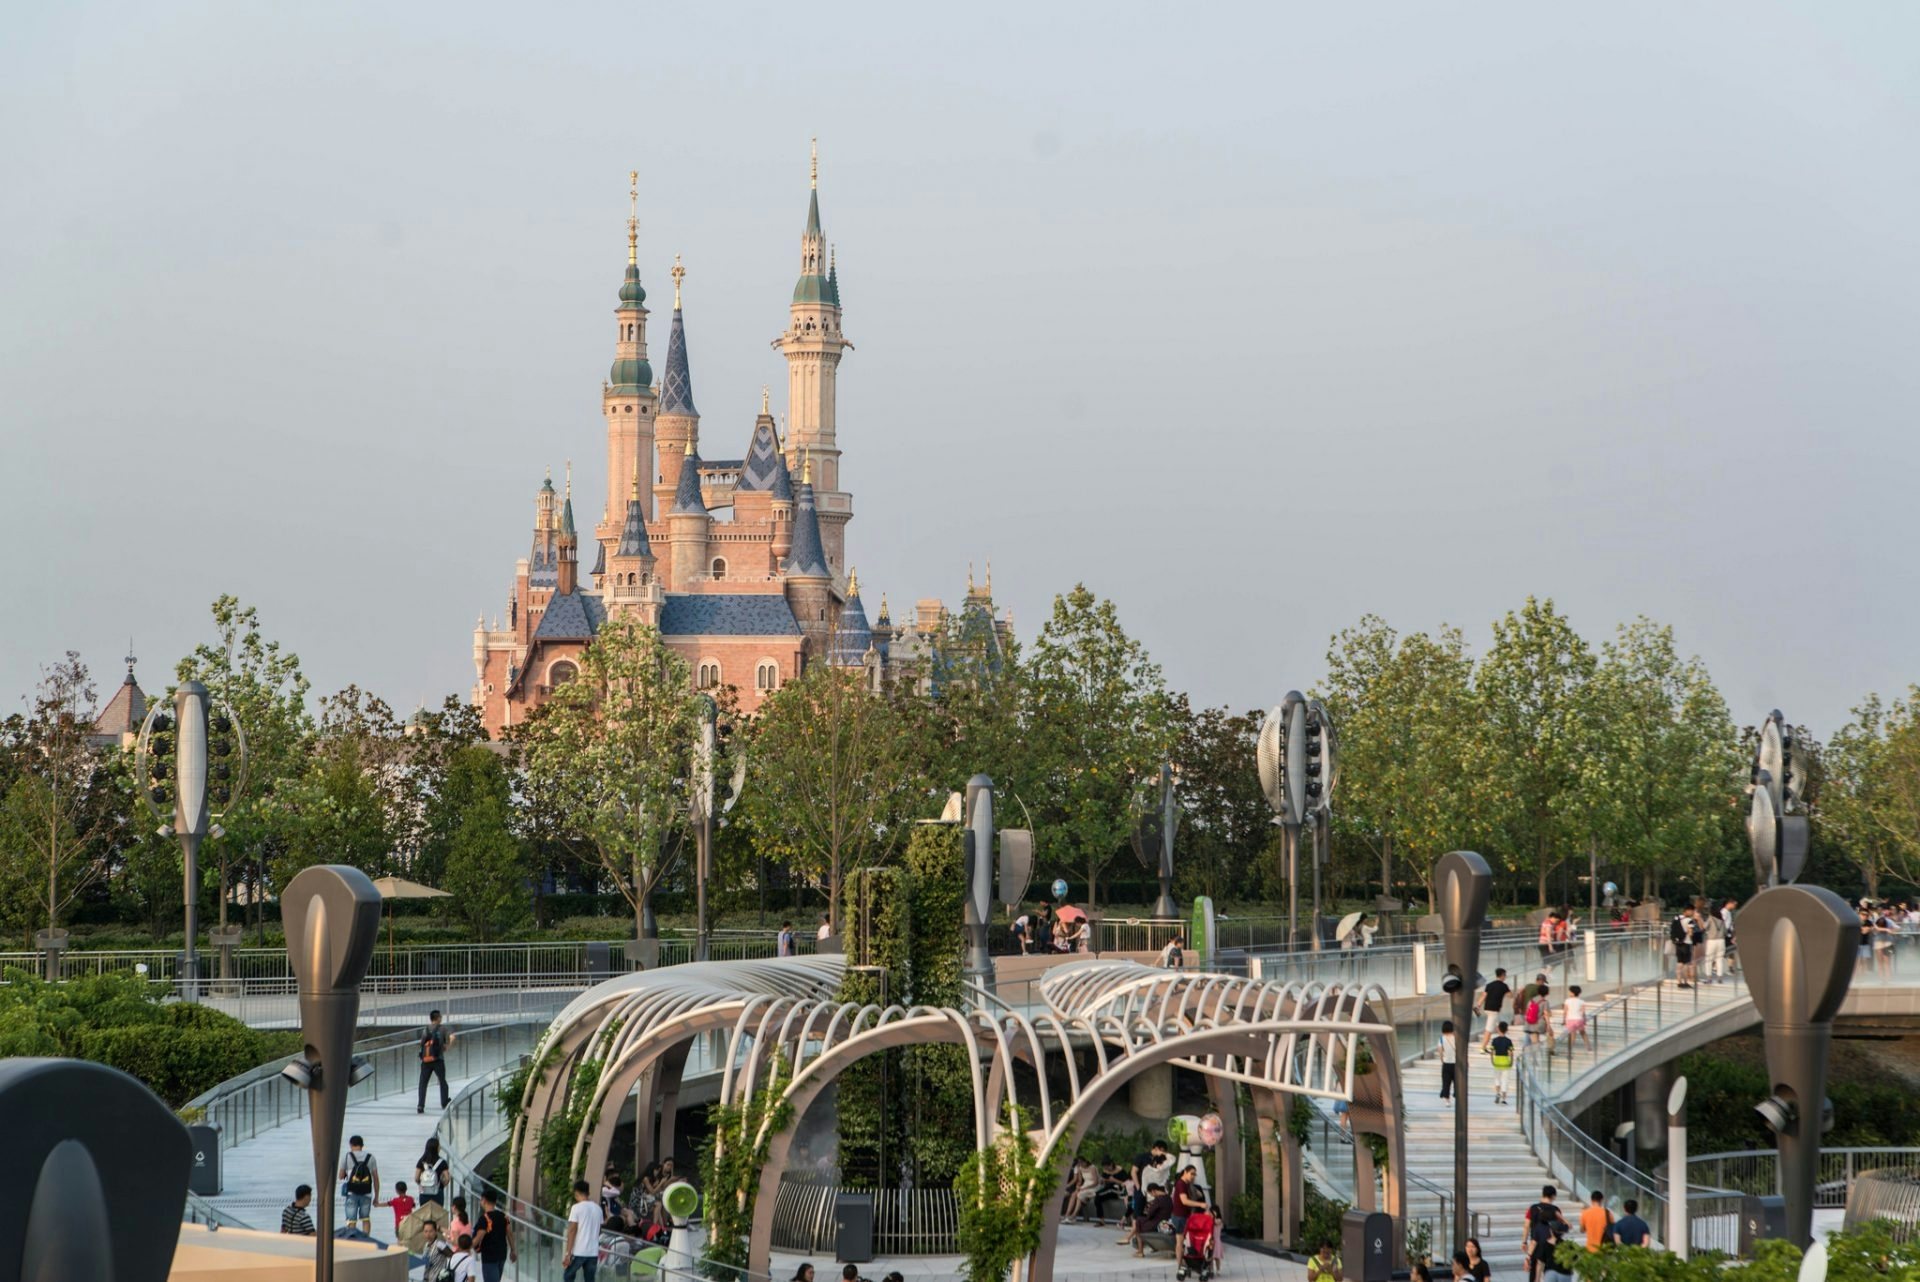 China's Dalian Wanda has pledged to overtake Disney as the world's leading tourism company. (Crosa/Flickr)